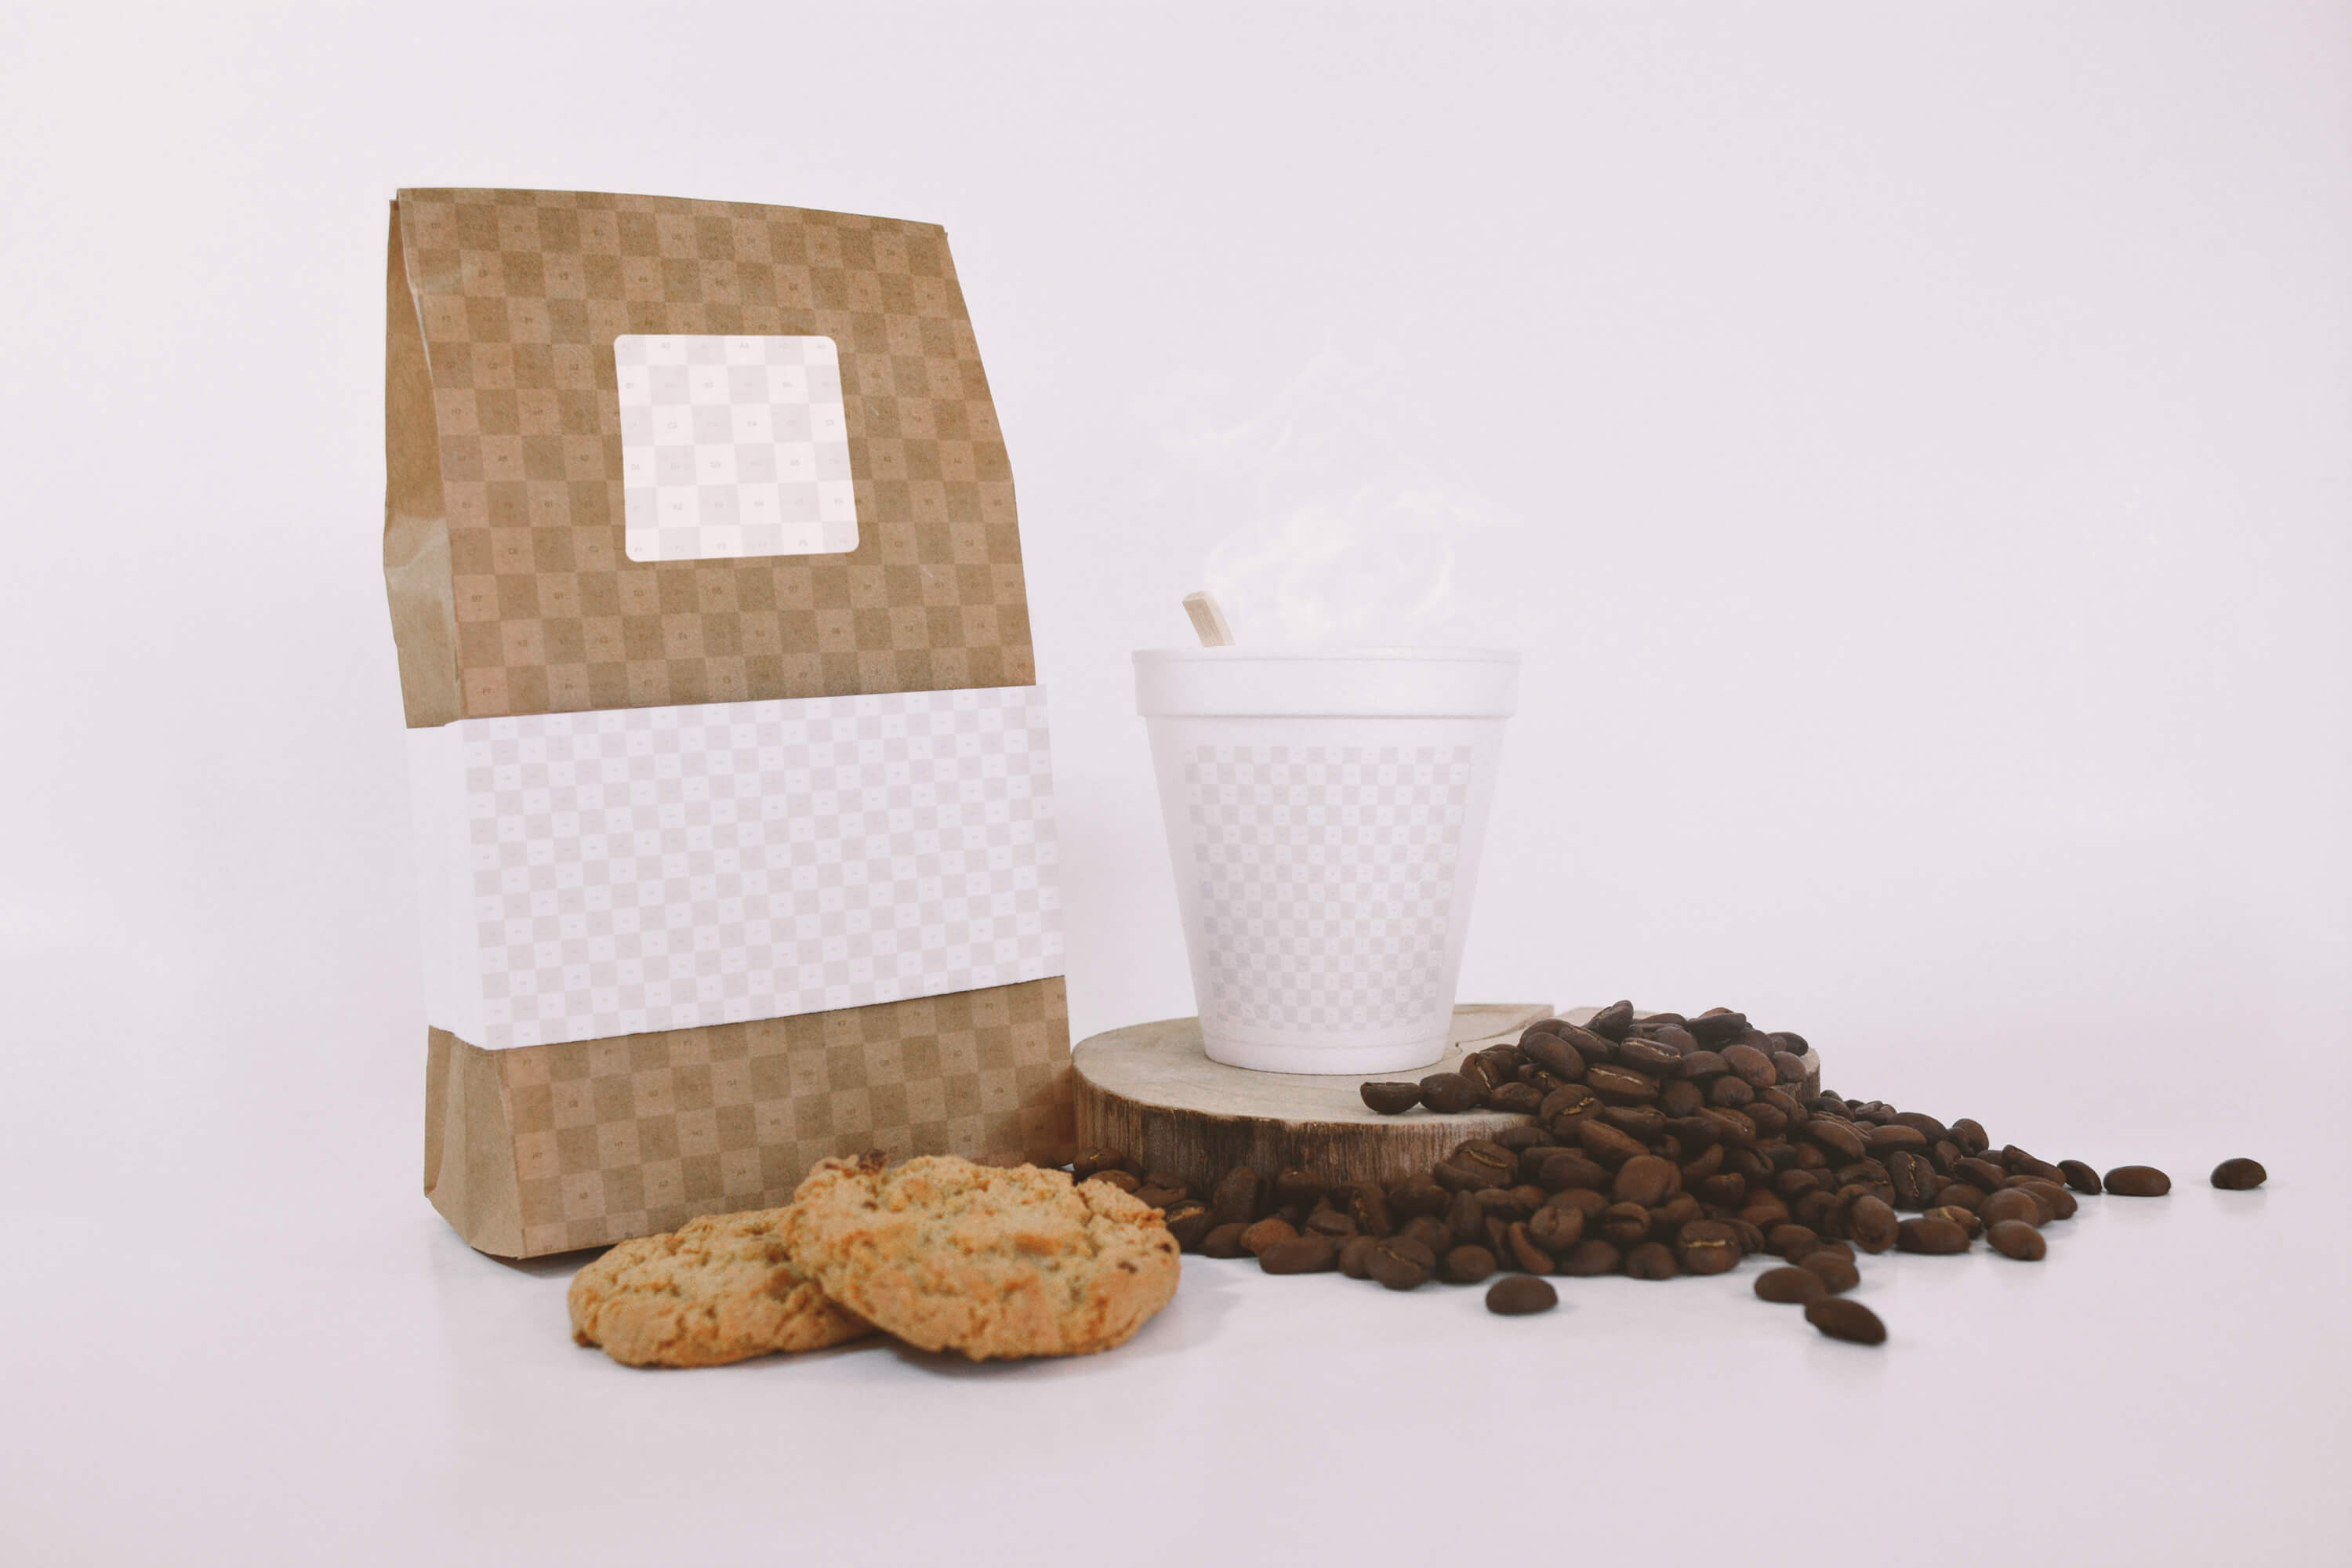 咖啡豆包装麻袋&咖啡纸杯品牌VI设计样机模板 Coffee Bag and Cup Mockup With Cookies插图(1)